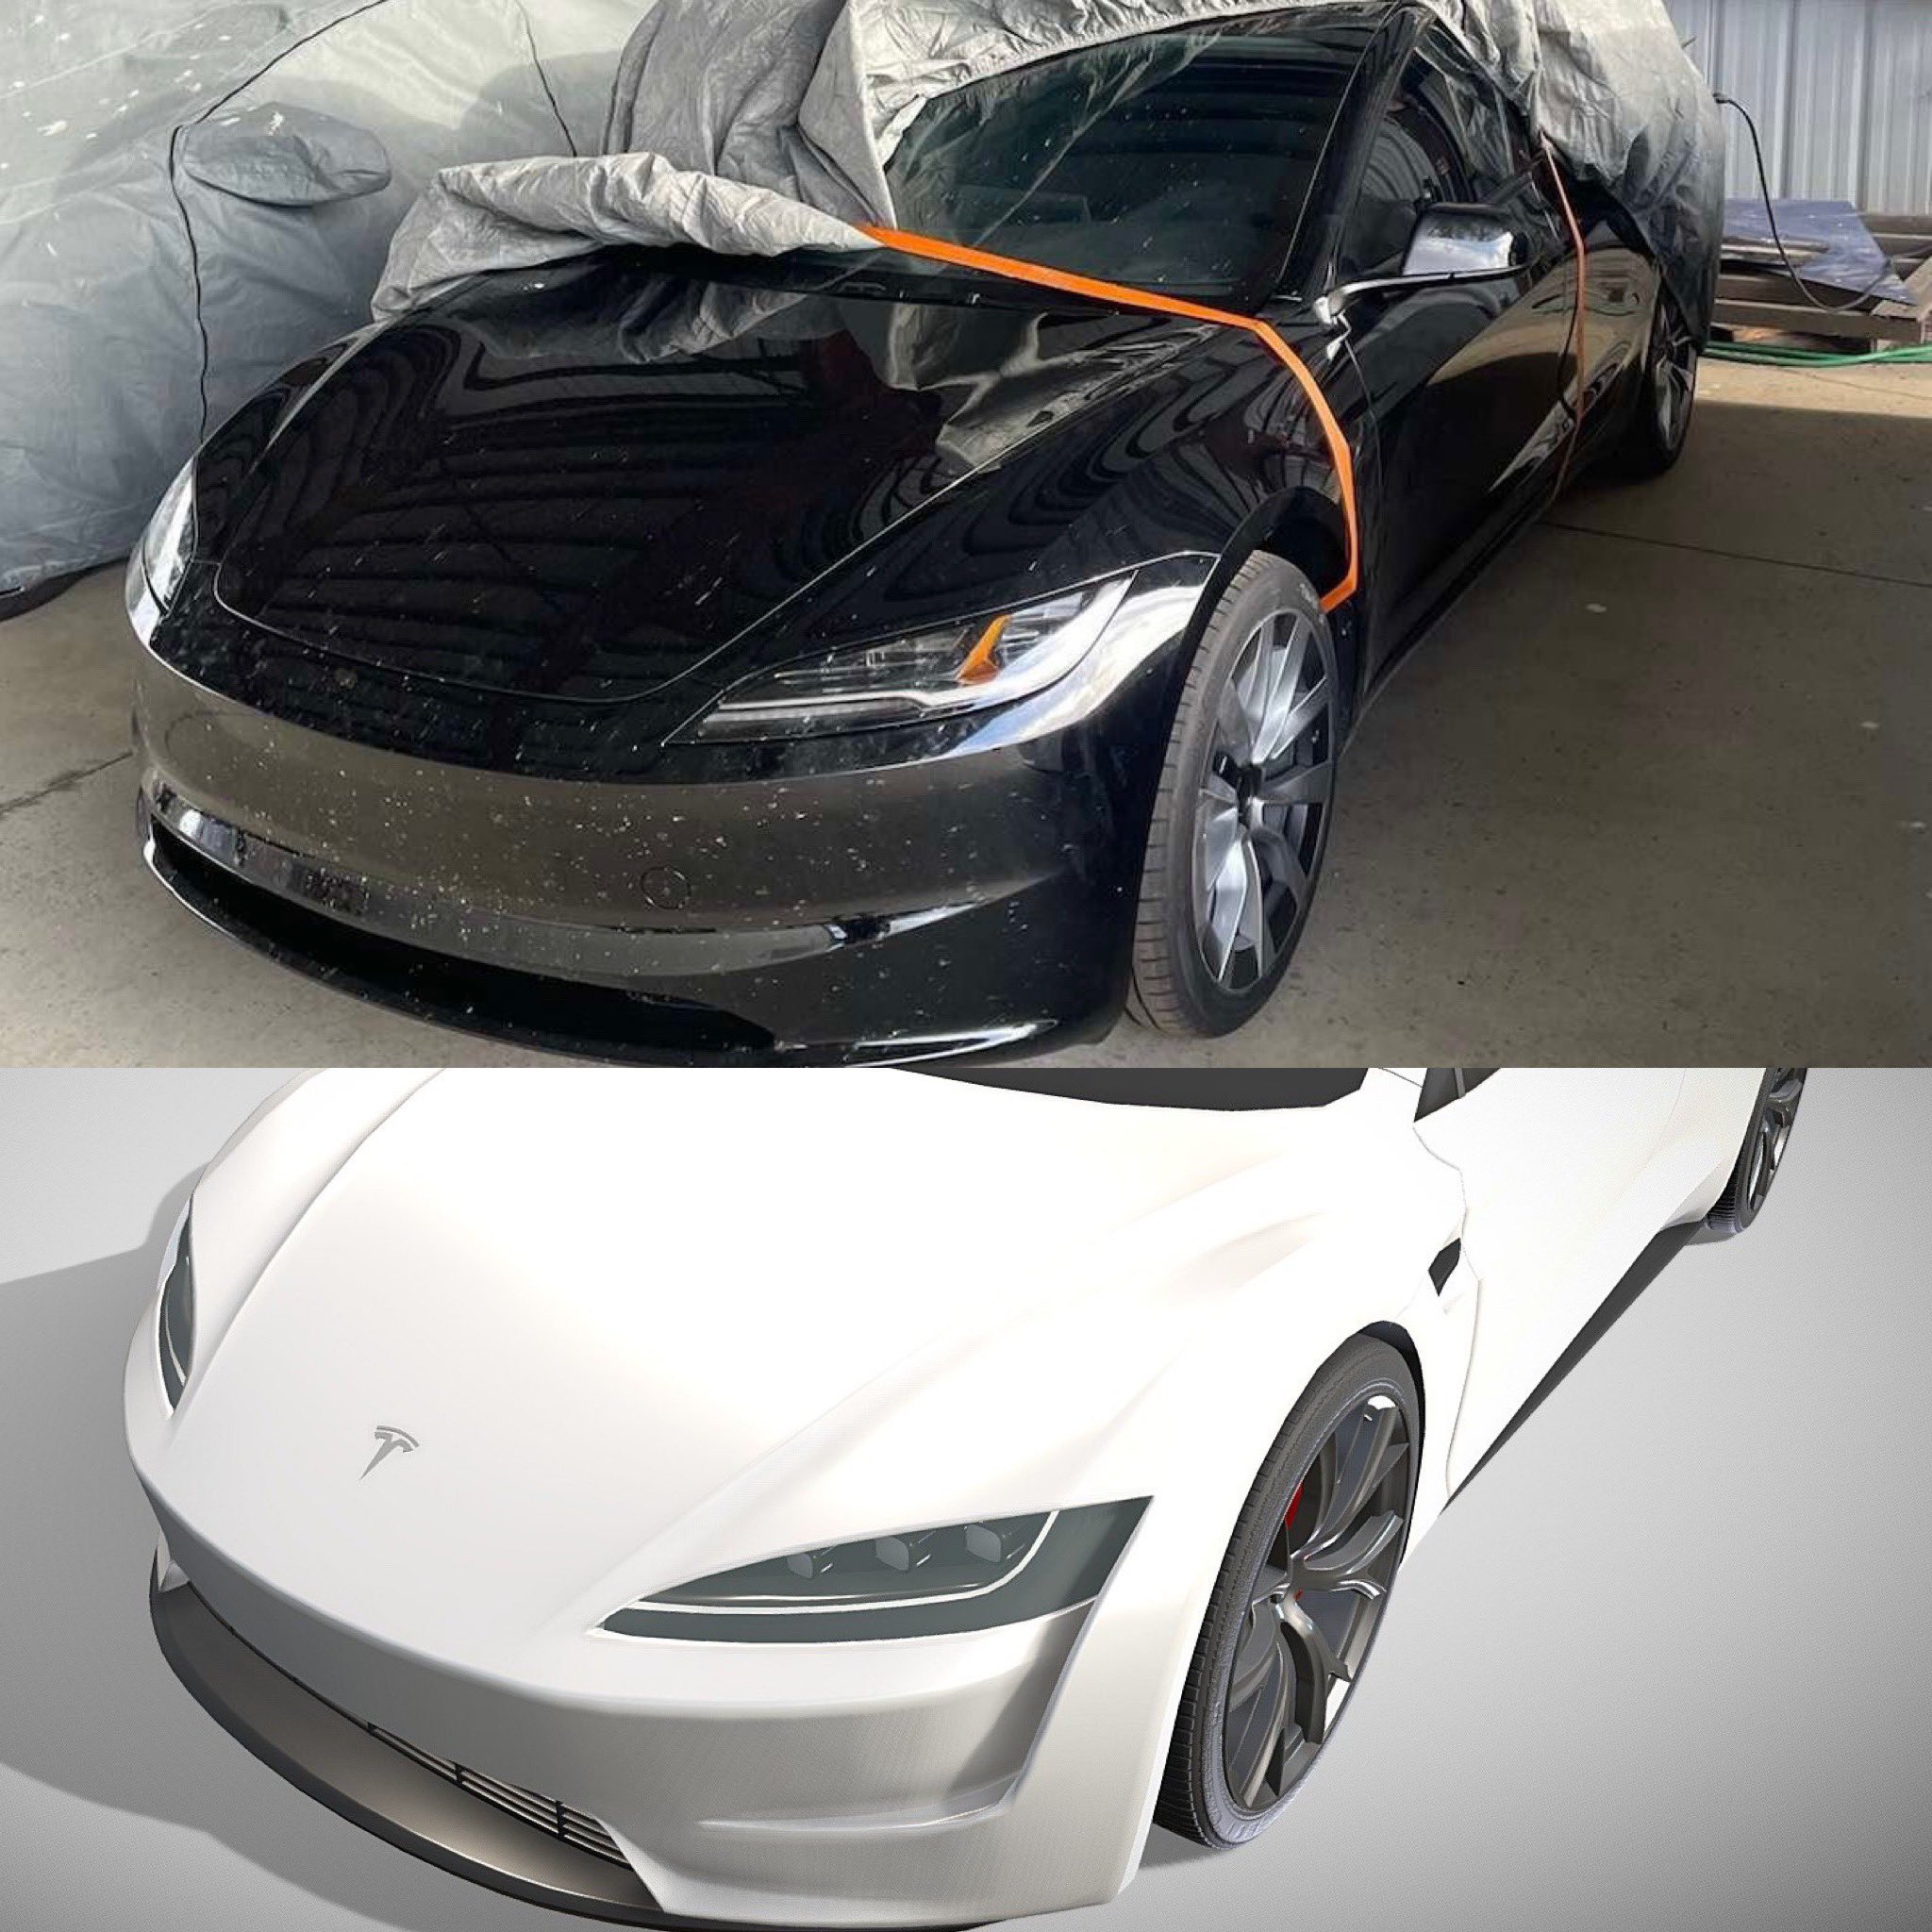 New Tesla Model 3 Highland Improvements & Specs! - CleanTechnica